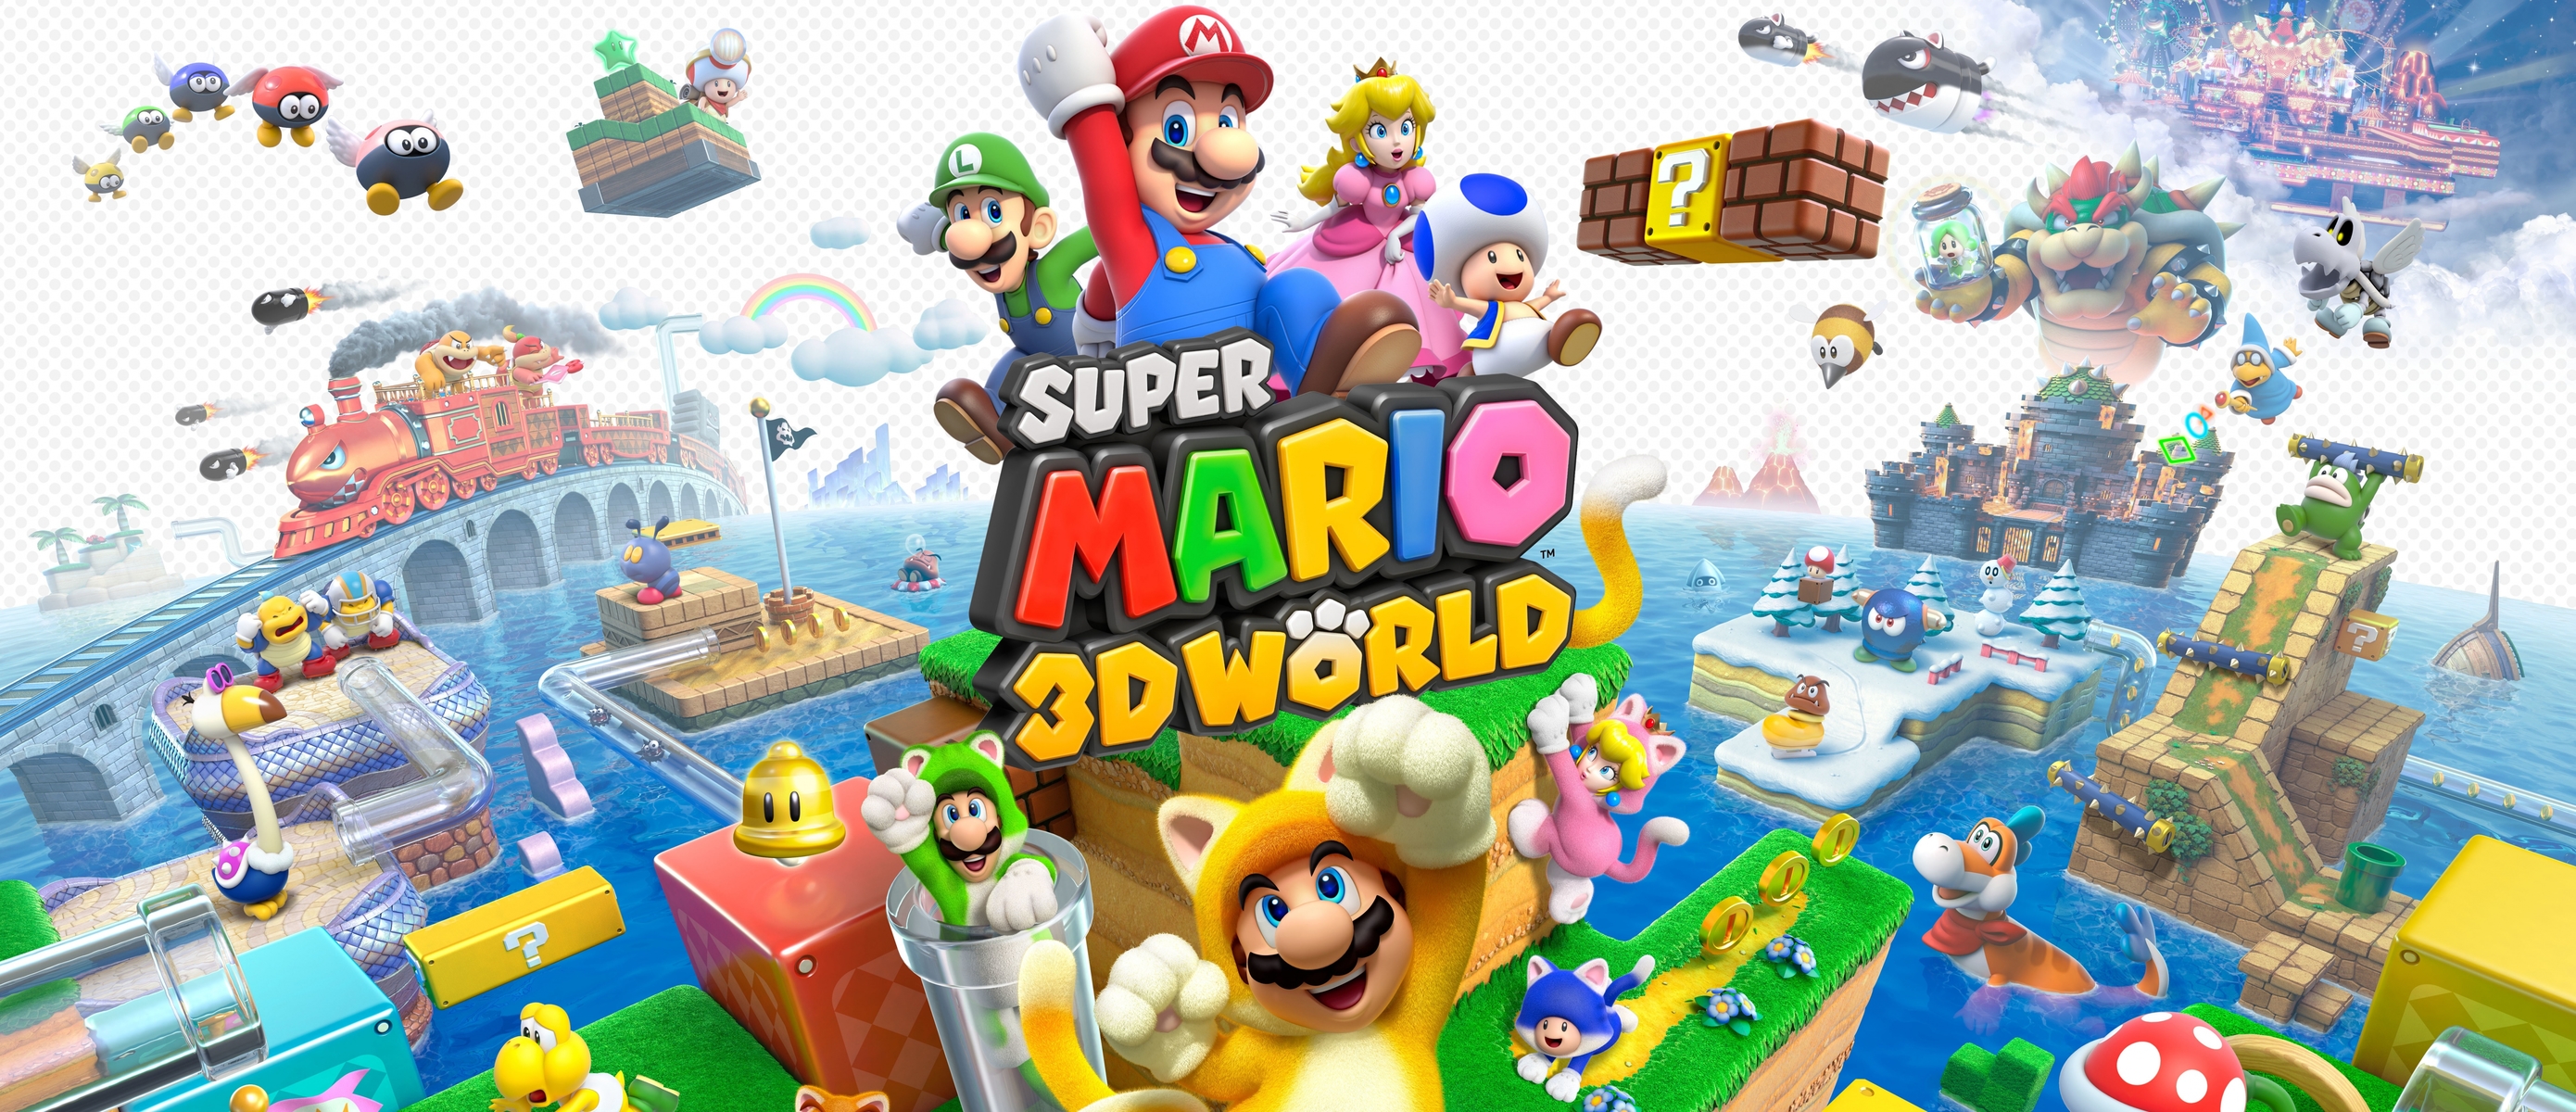 Super mario world. Super Mario 3d World Nintendo Wii u. Super Mario 3d World Bowser's Fury. Super Mario 3 d World Bowser s Fury. Super Mario 3d World: блобобосс.